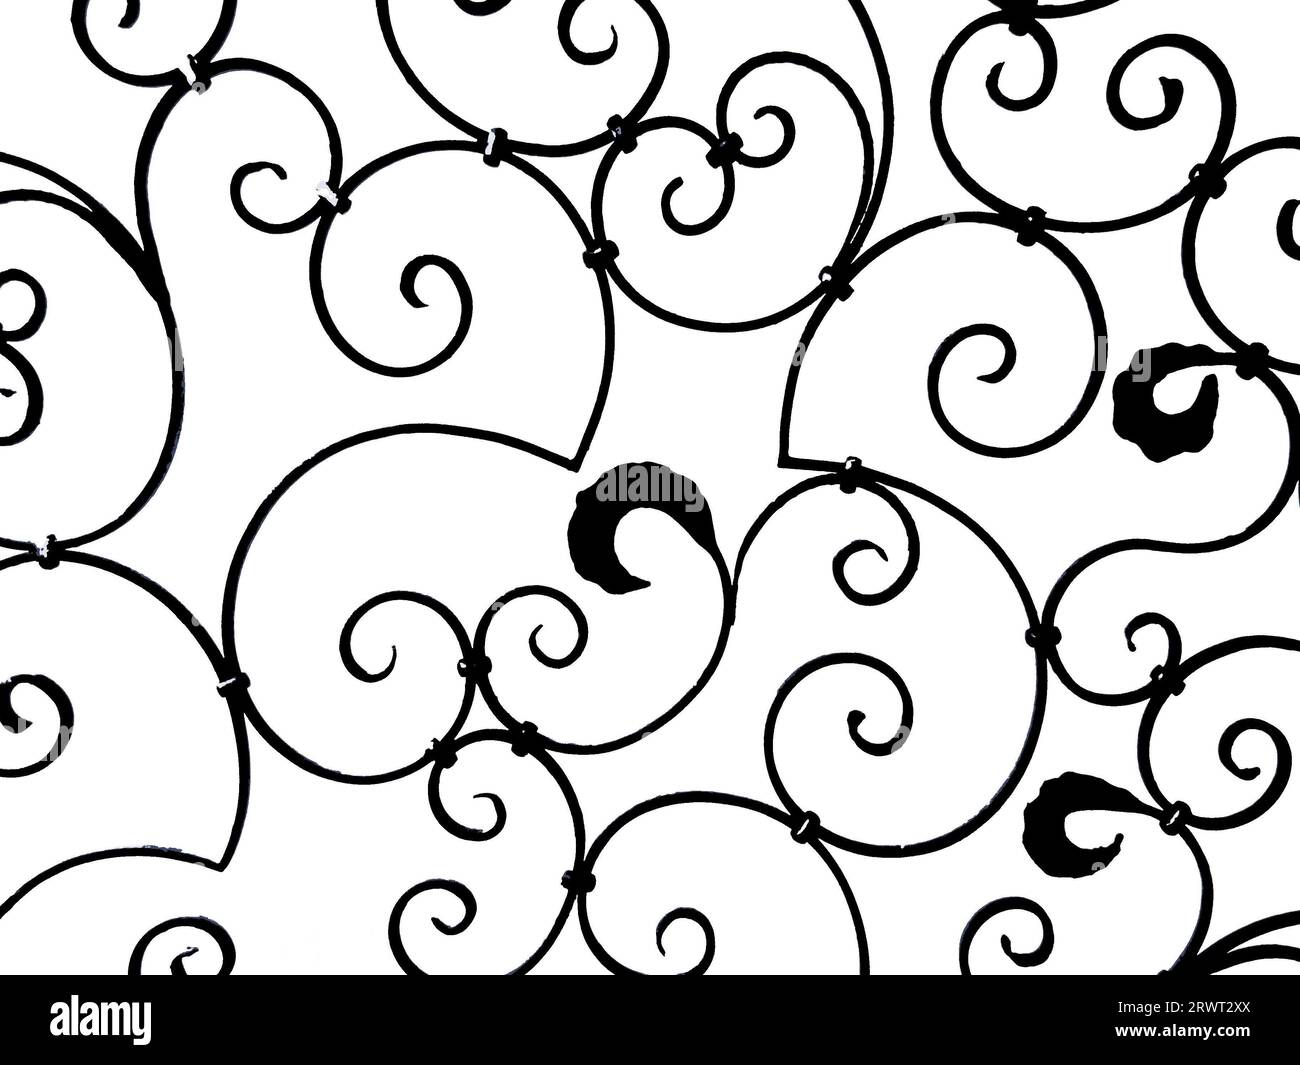 Black and white decorative grid, slightly alienated Stock Photo